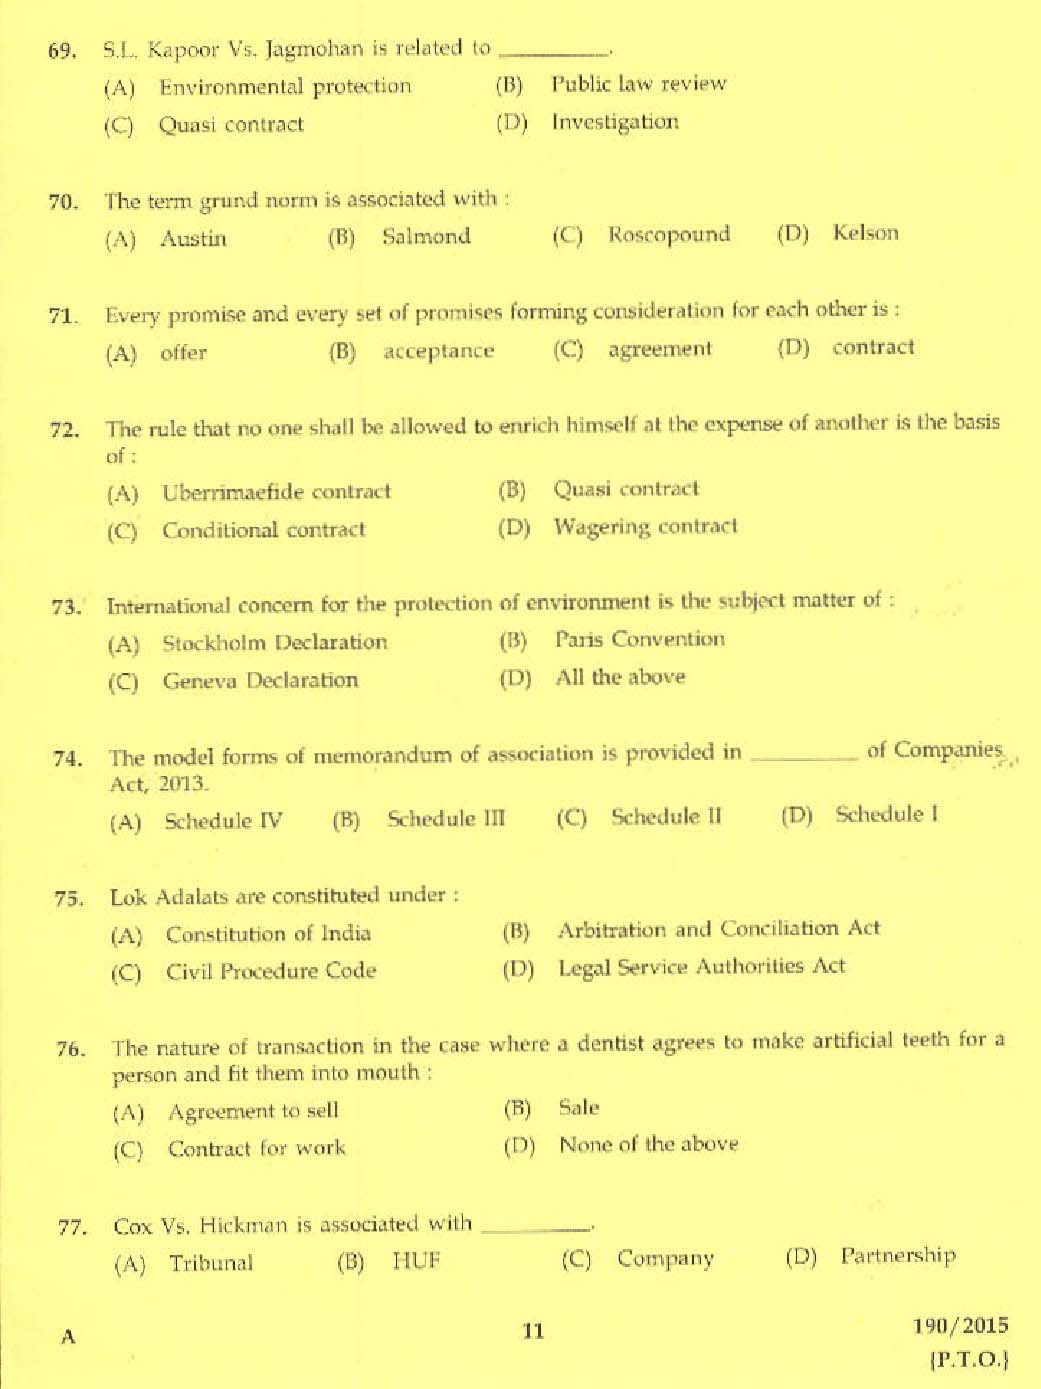 KPSC Legal Assistant Grade II Exam 2015 Code 1902015 9